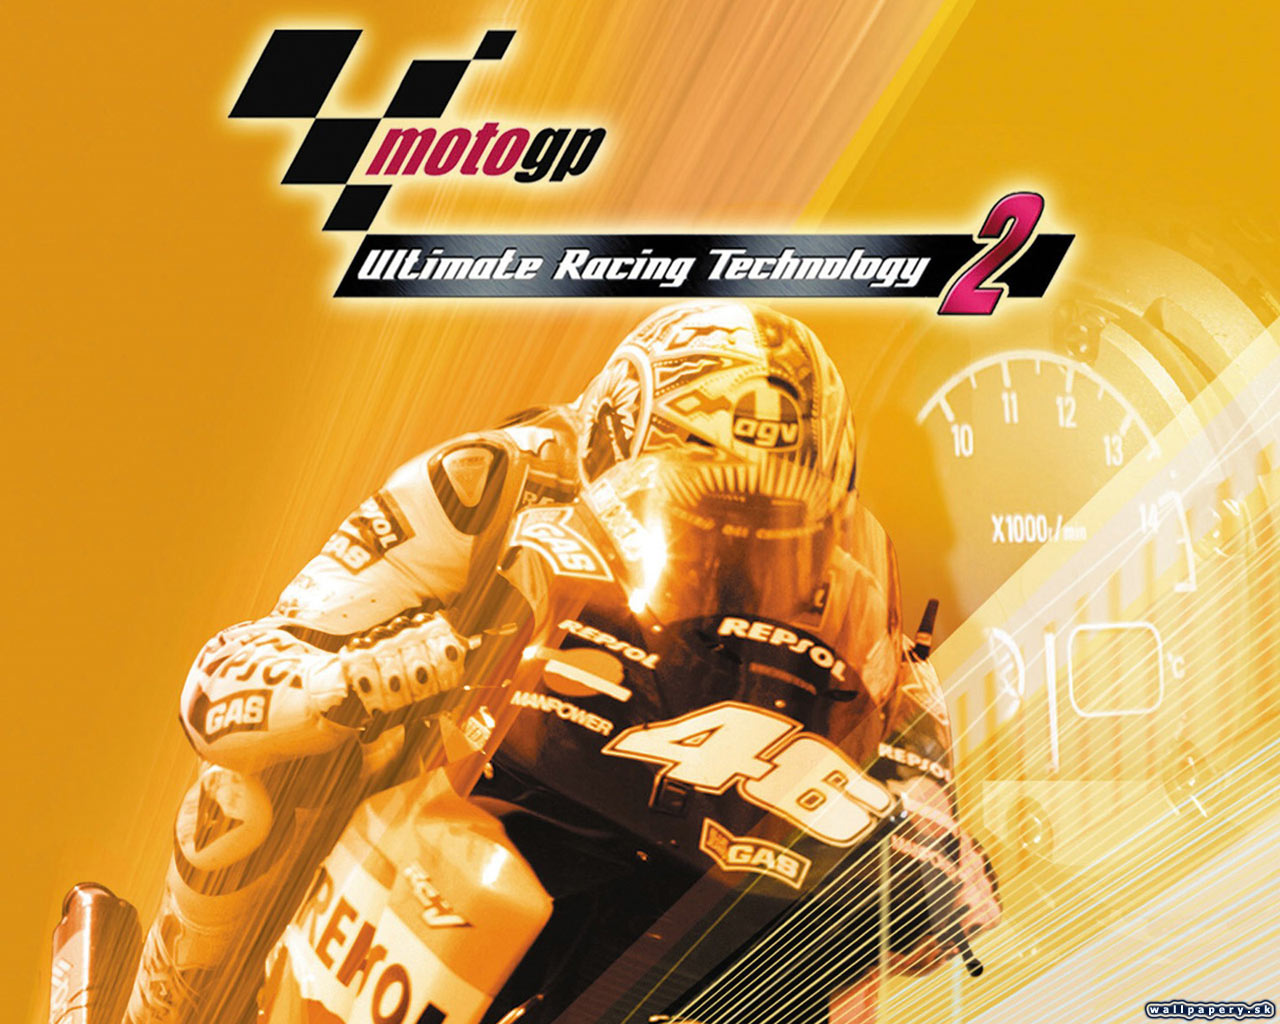 Moto GP - Ultimate Racing Technology 2 - wallpaper 6